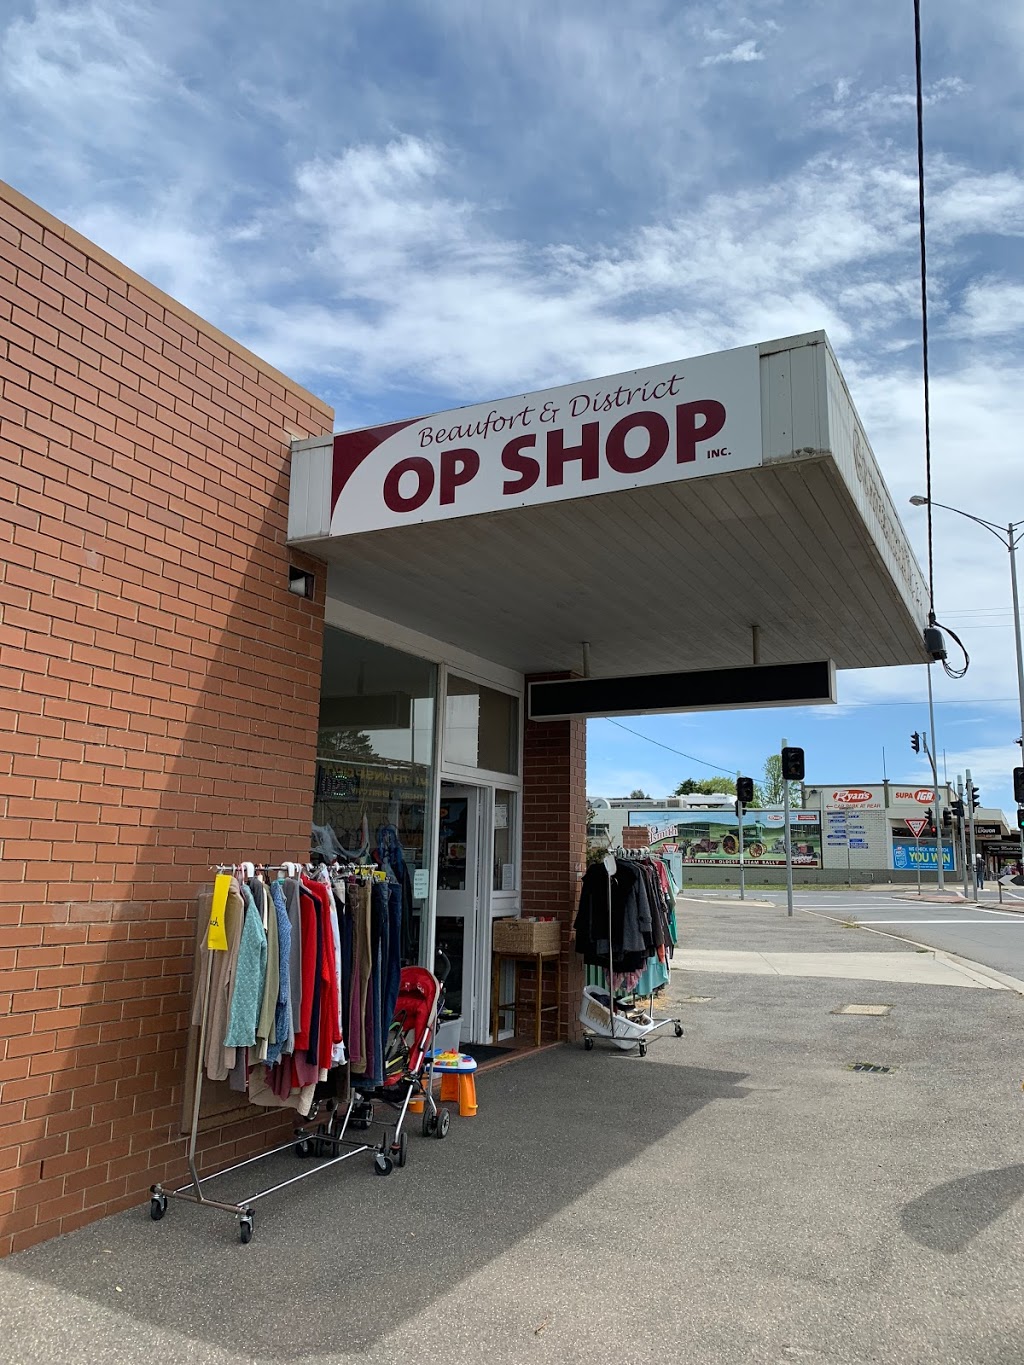 Beaufort & District Op Shop | Beaufort VIC 3373, Australia